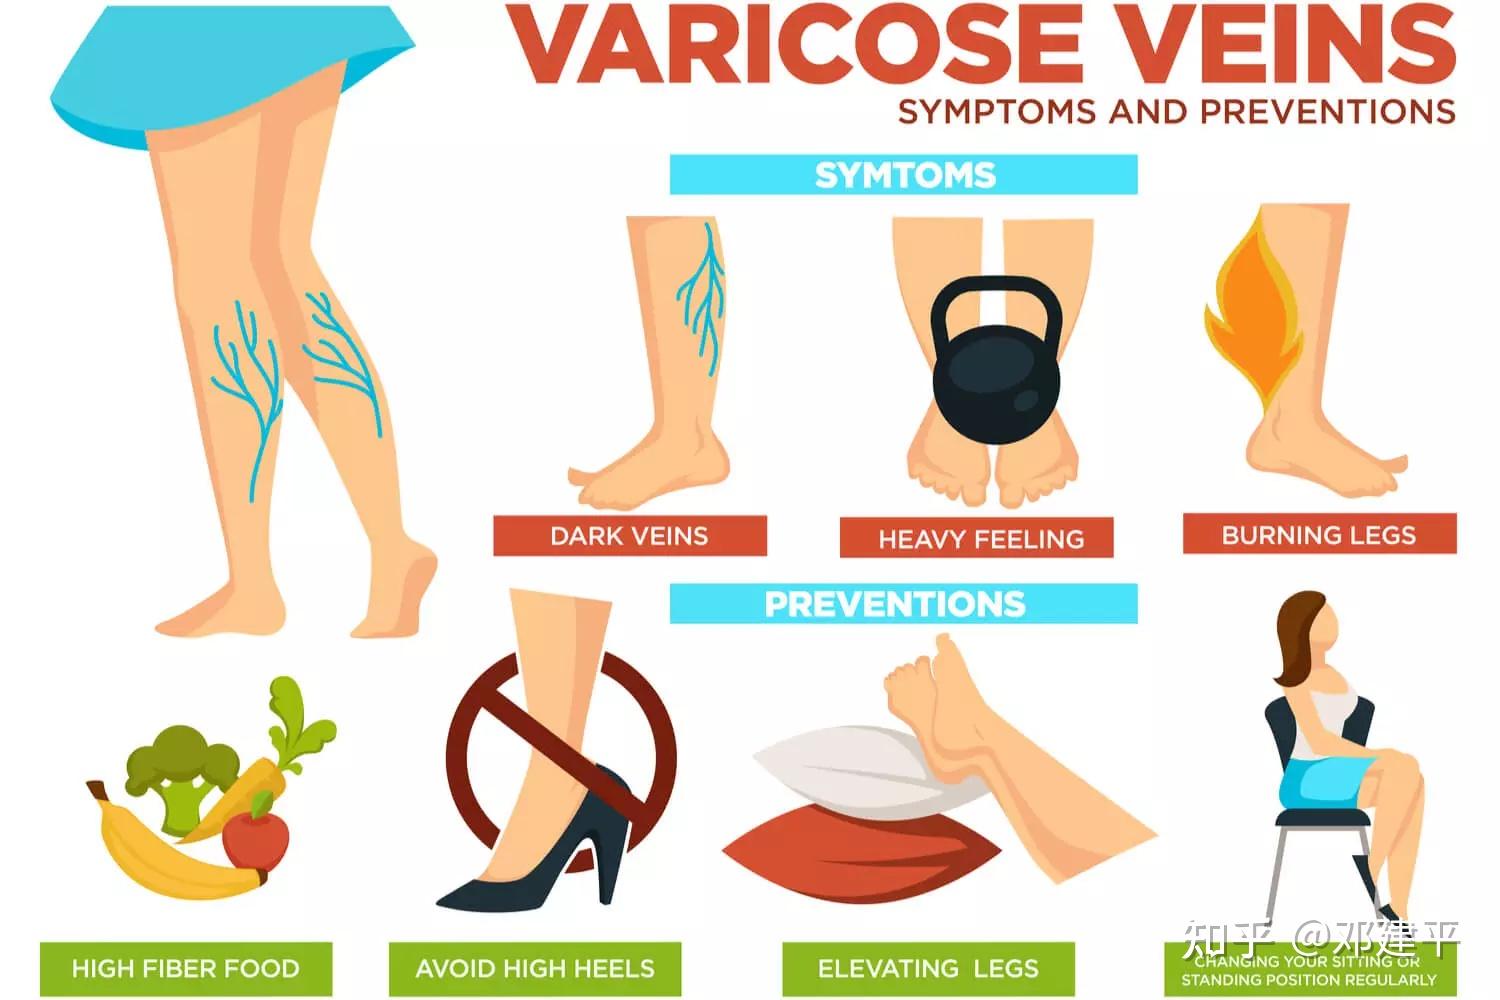 How Do You Get Varicose Veins?